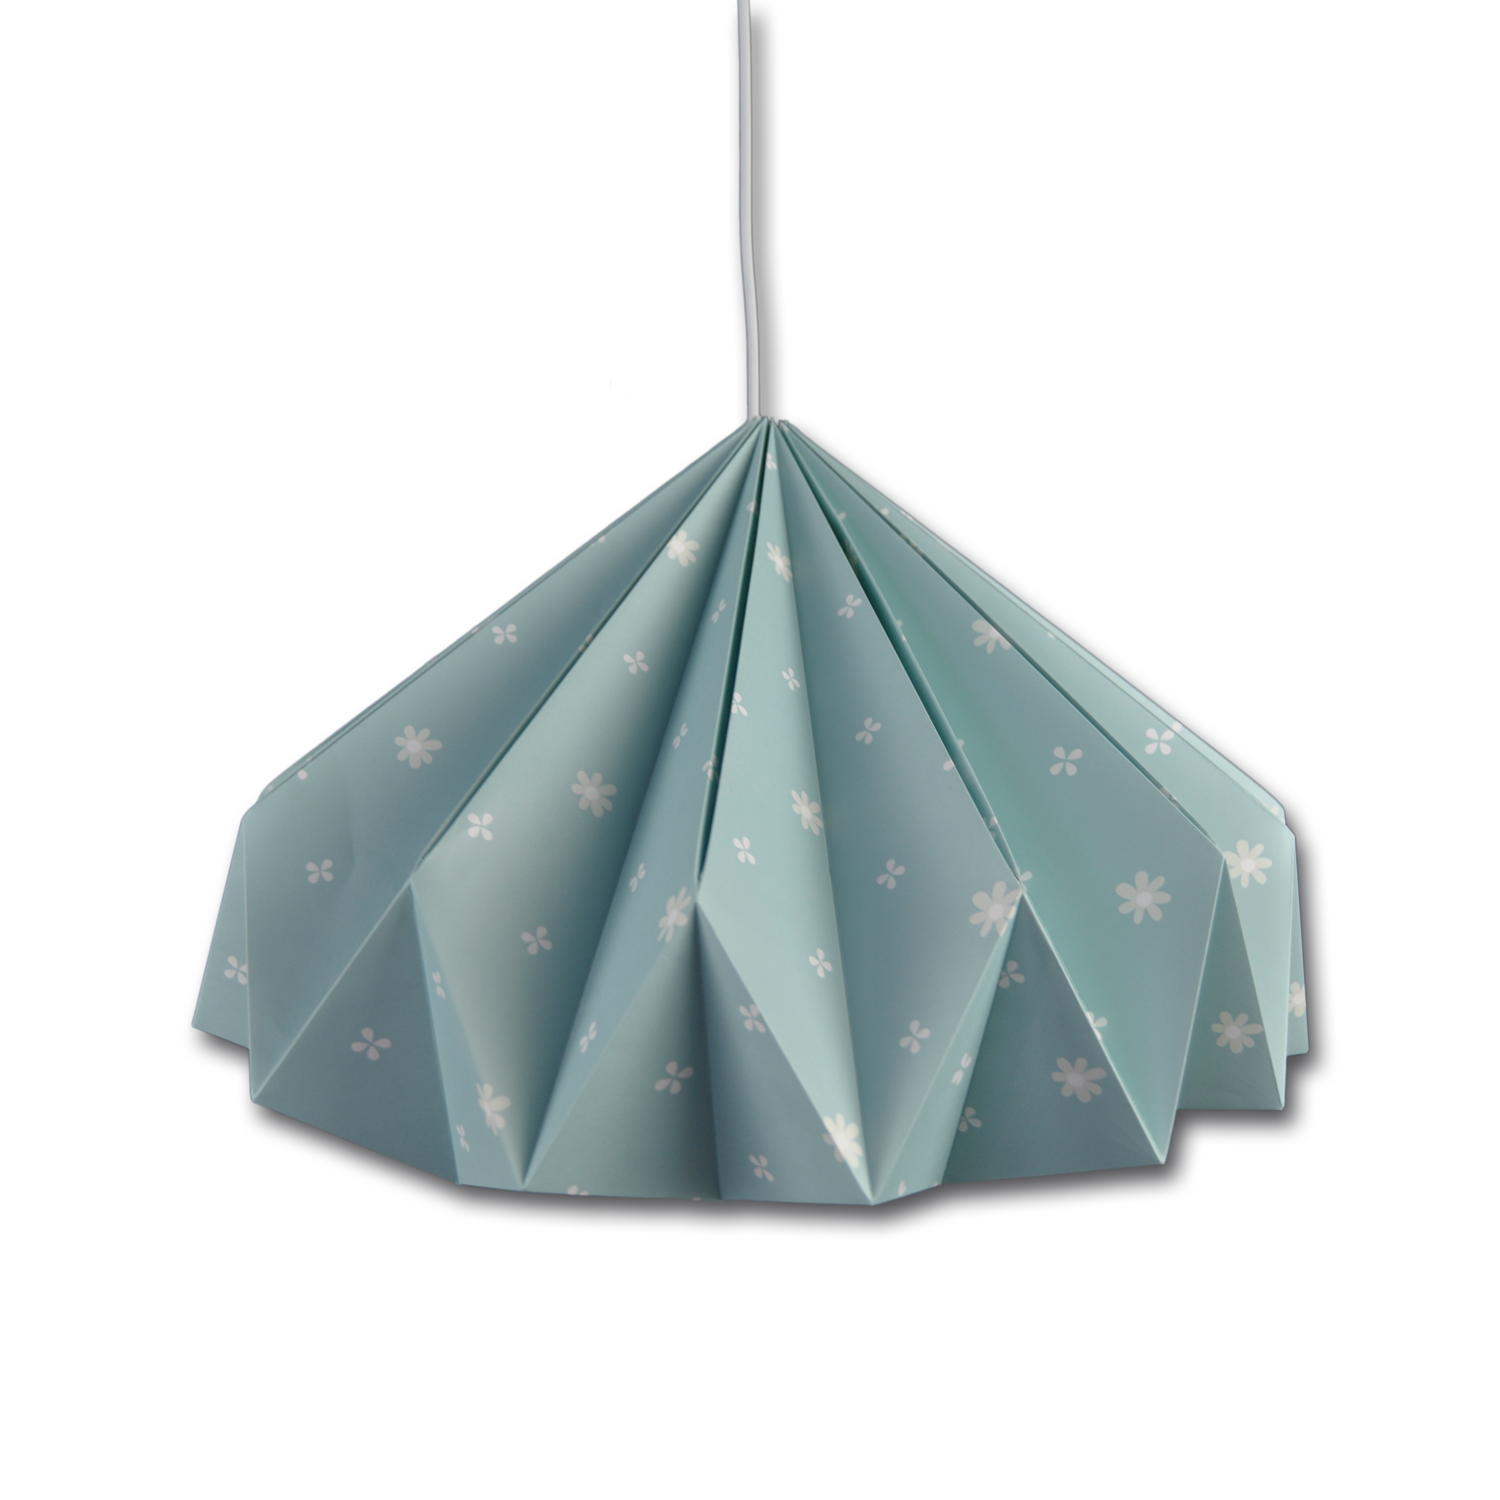 Hot Sell Amazing Origami Lamp Shade Blue Lanterns